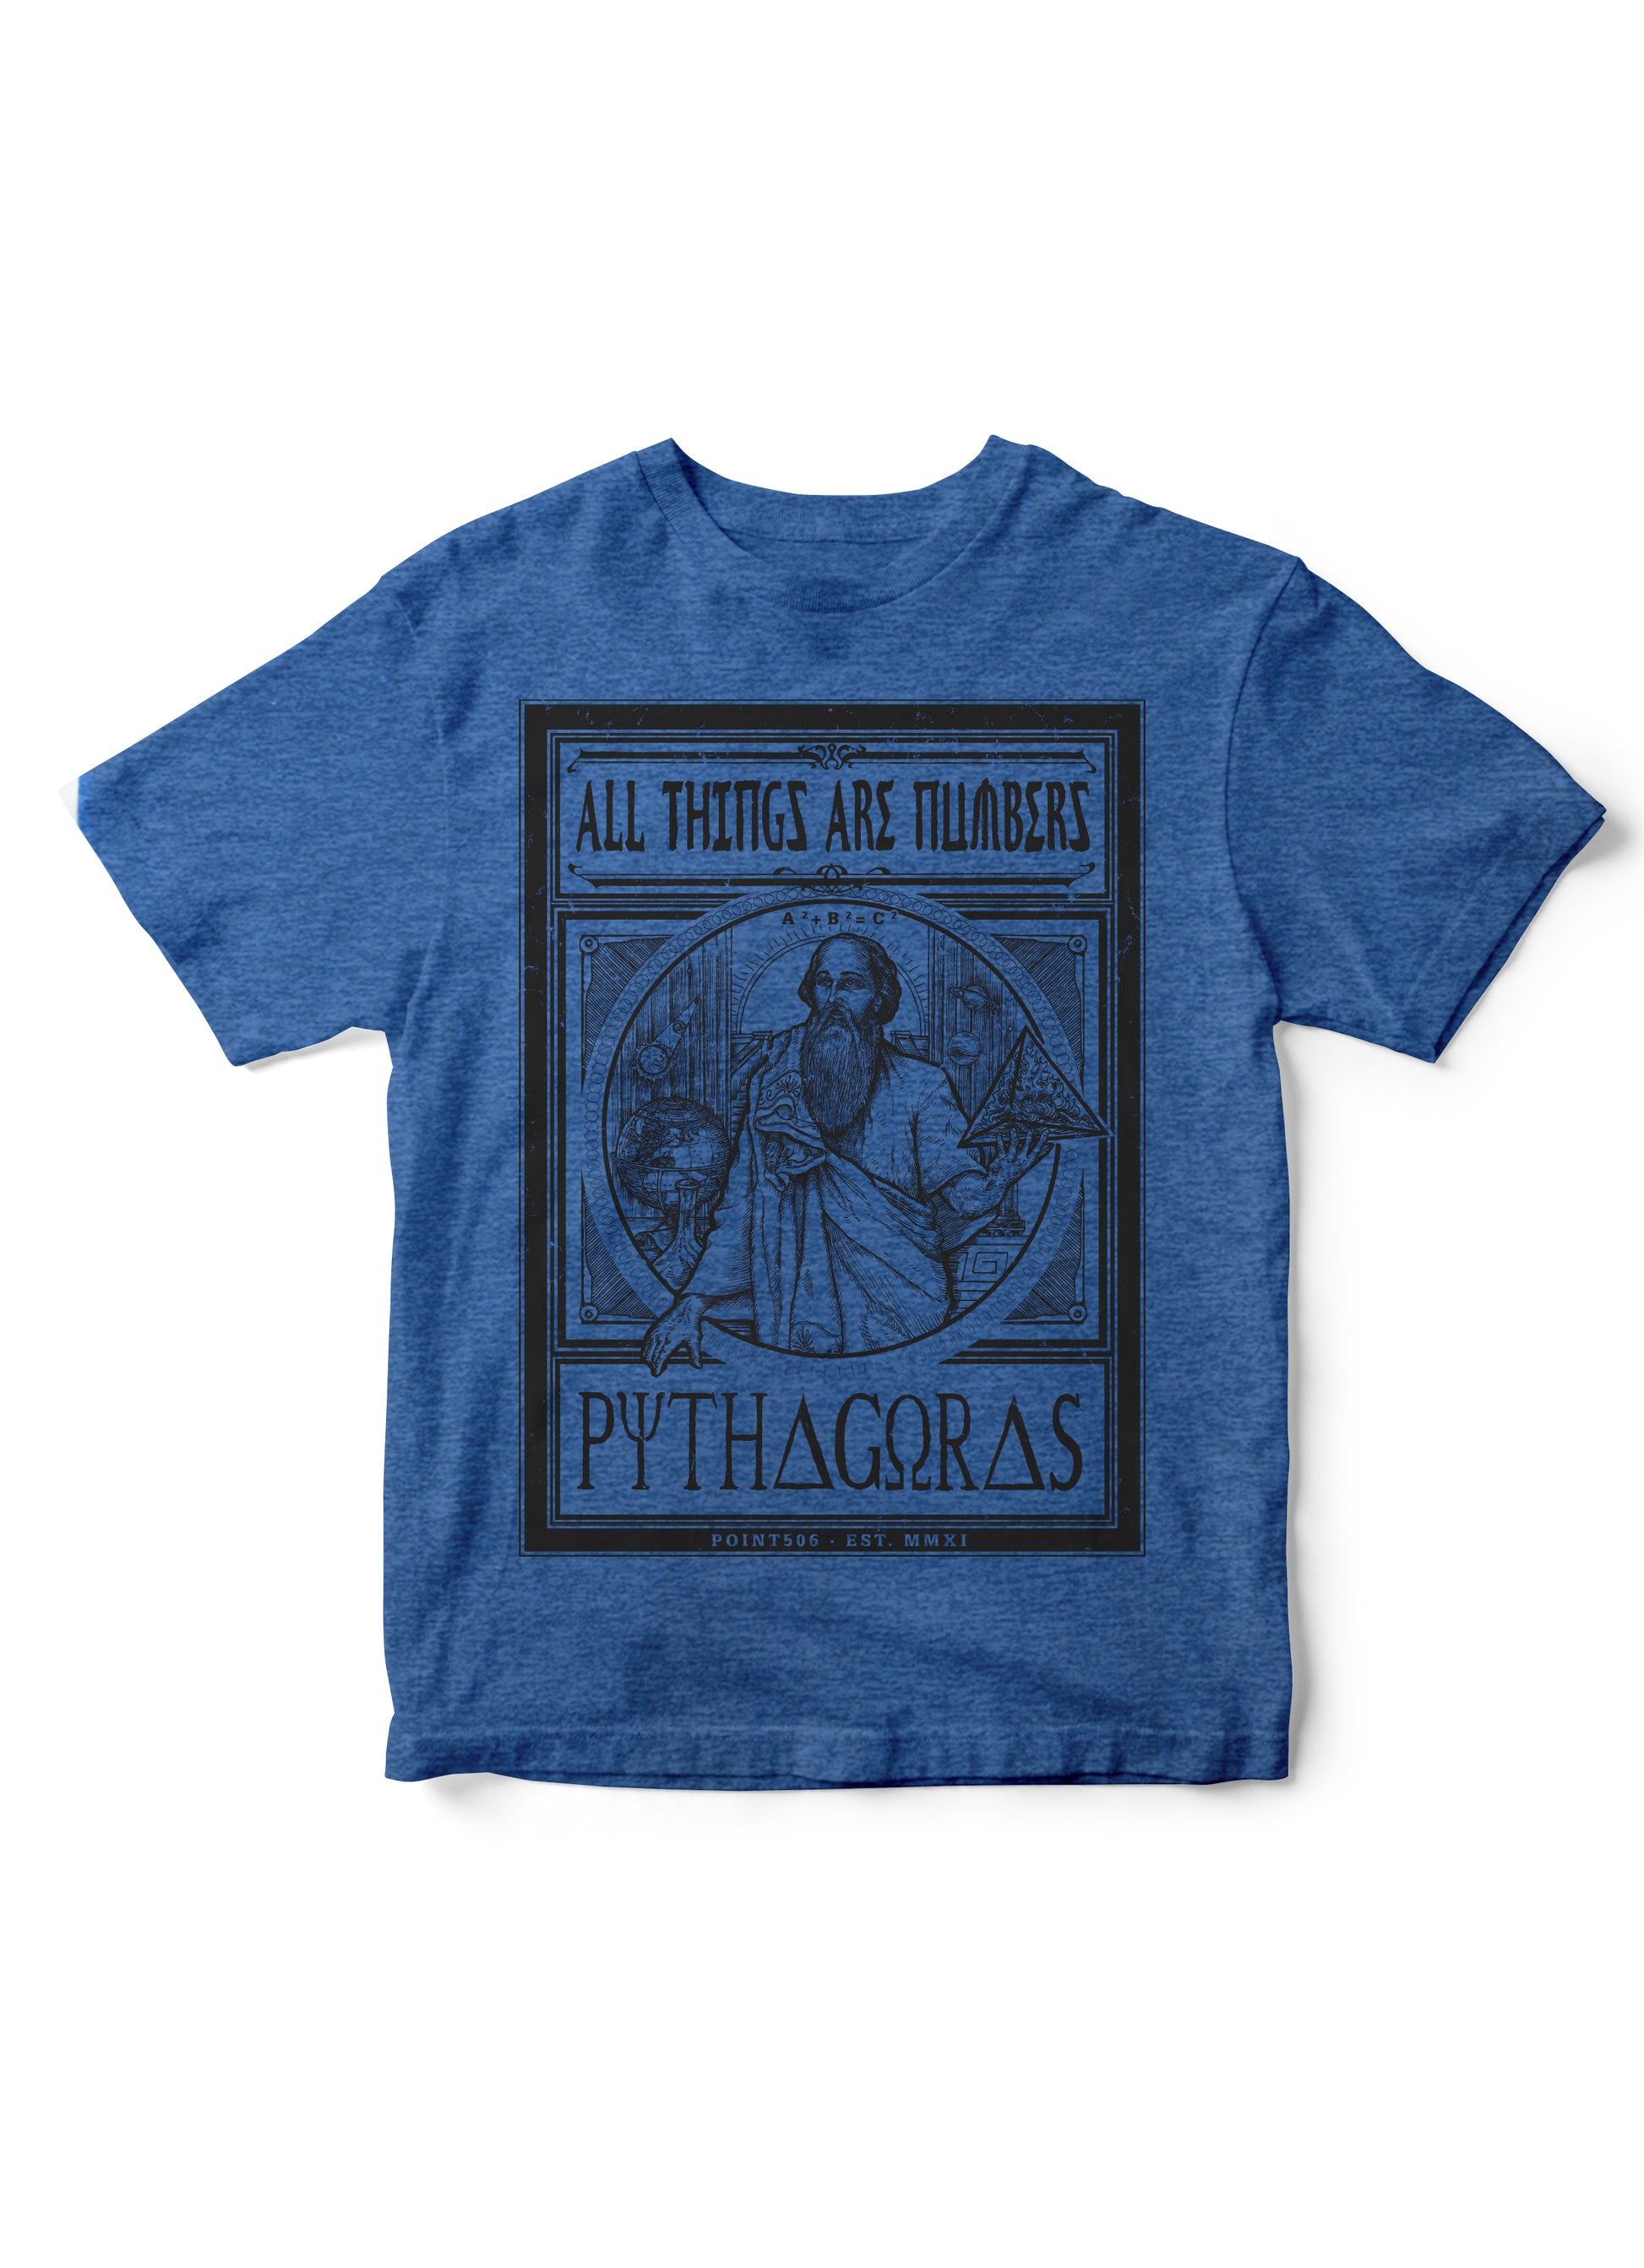 science shirts for kids, kids science shirts, Pythagoras shirt, math tshirts